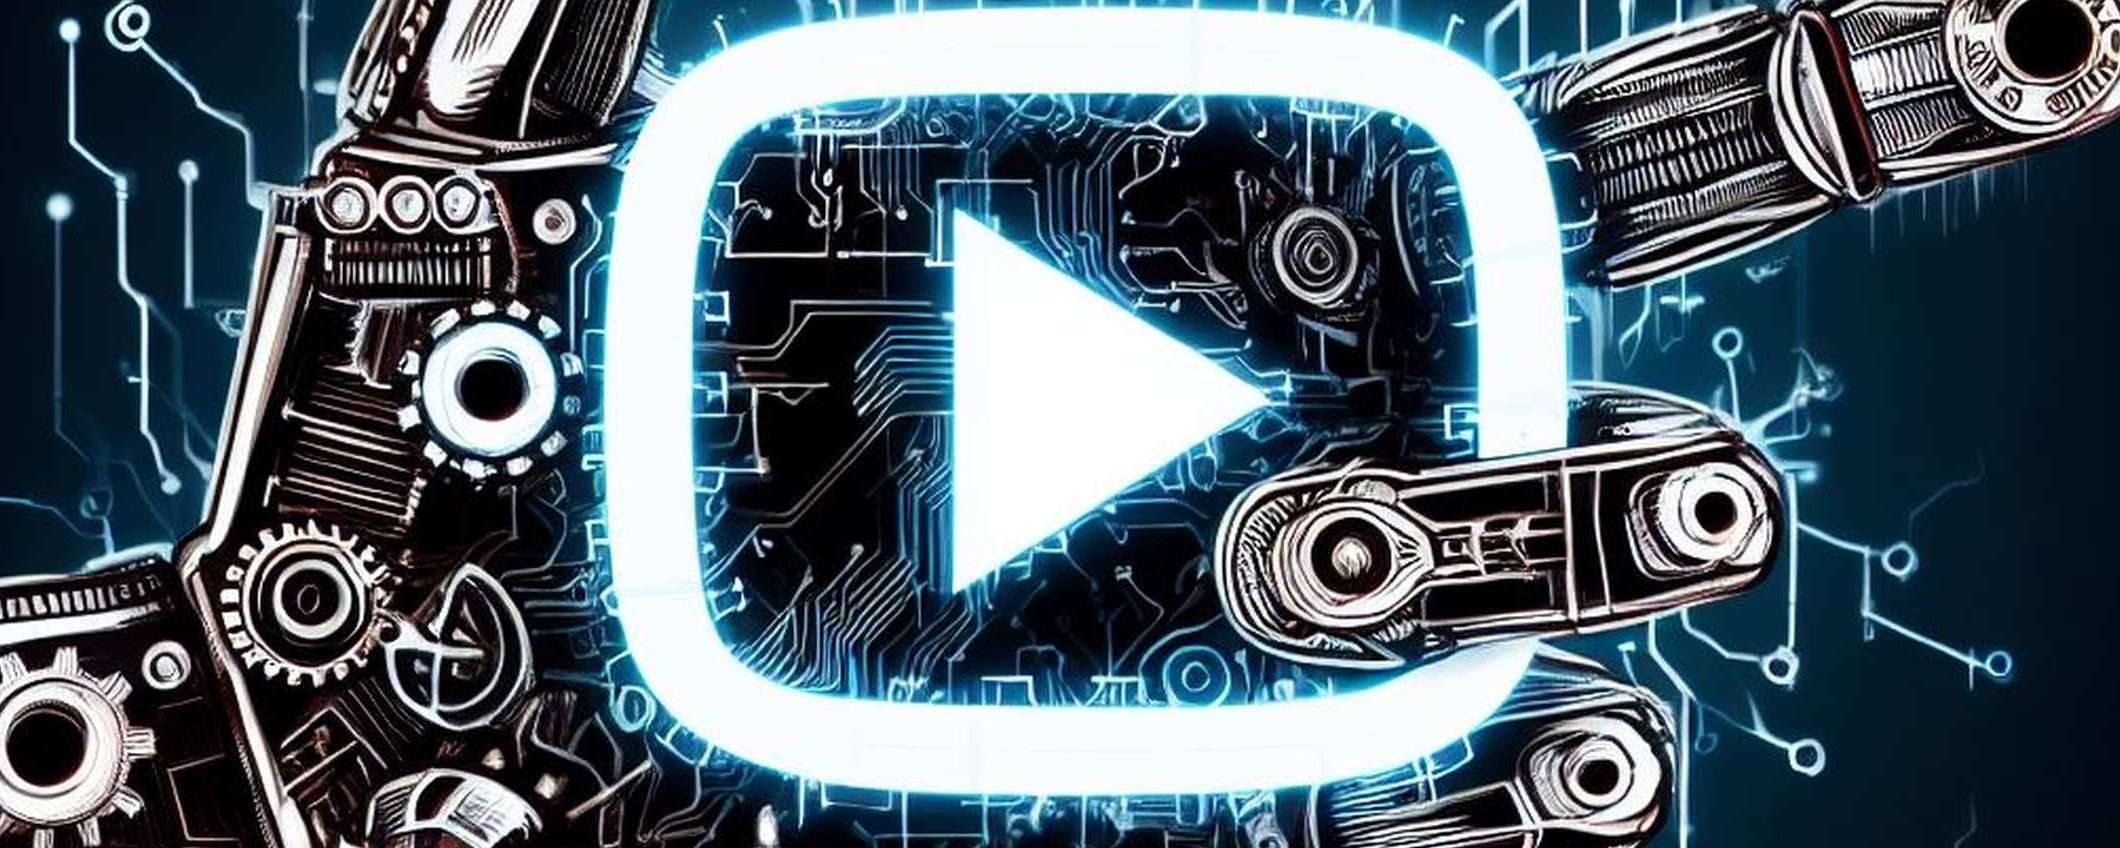 YouTube chiederà di indicare i video IA realistici